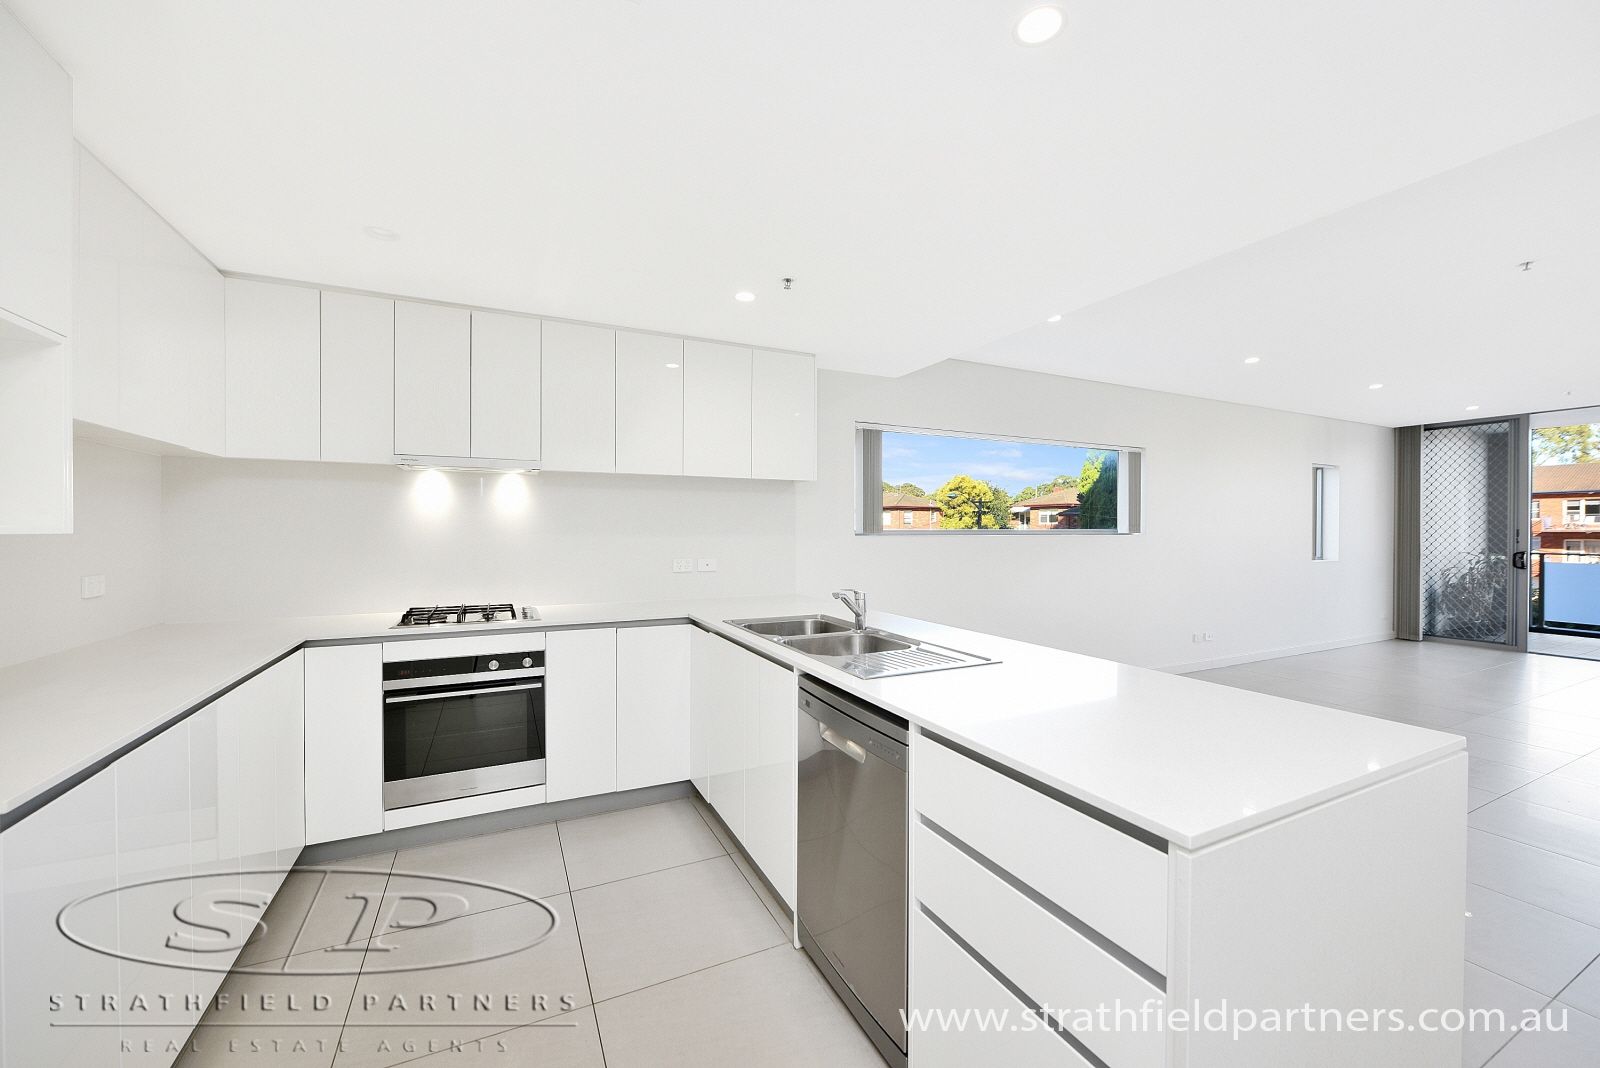 3 bedrooms Apartment / Unit / Flat in 107/29 Morwick Street STRATHFIELD NSW, 2135